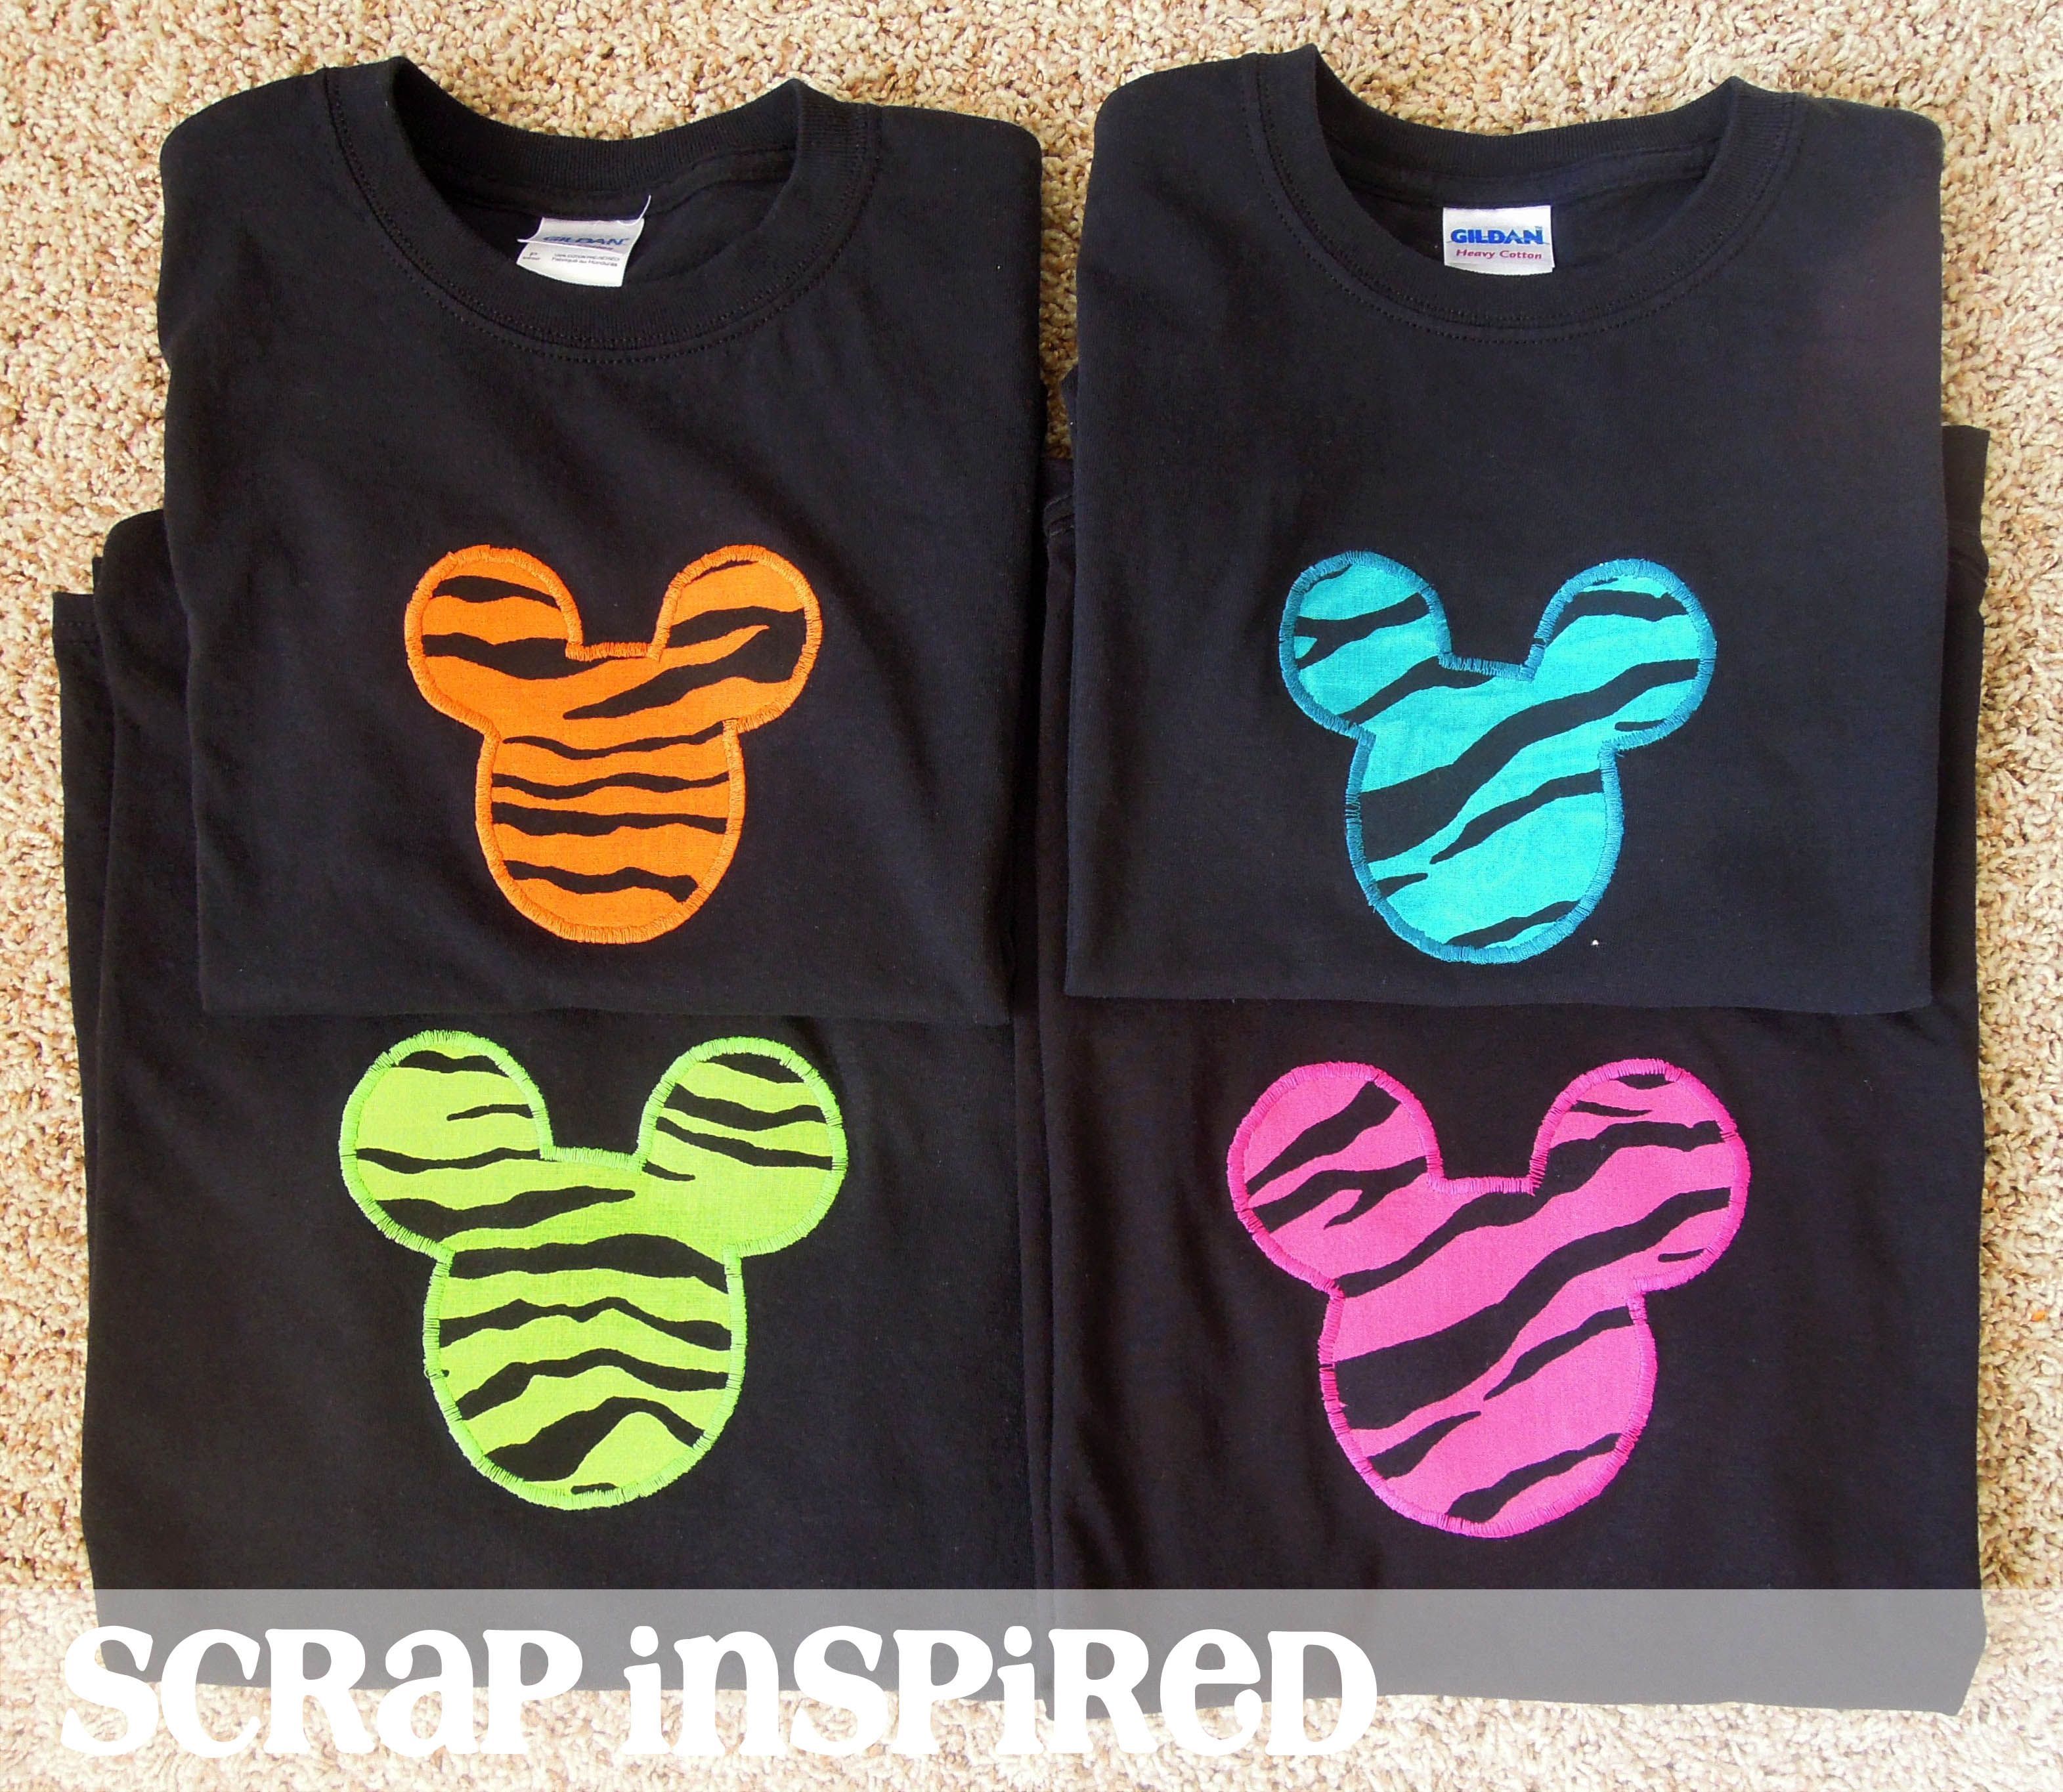 DIY Disney shirts for Animal Kingdom. Full tutorial included. By Monica at Scrap